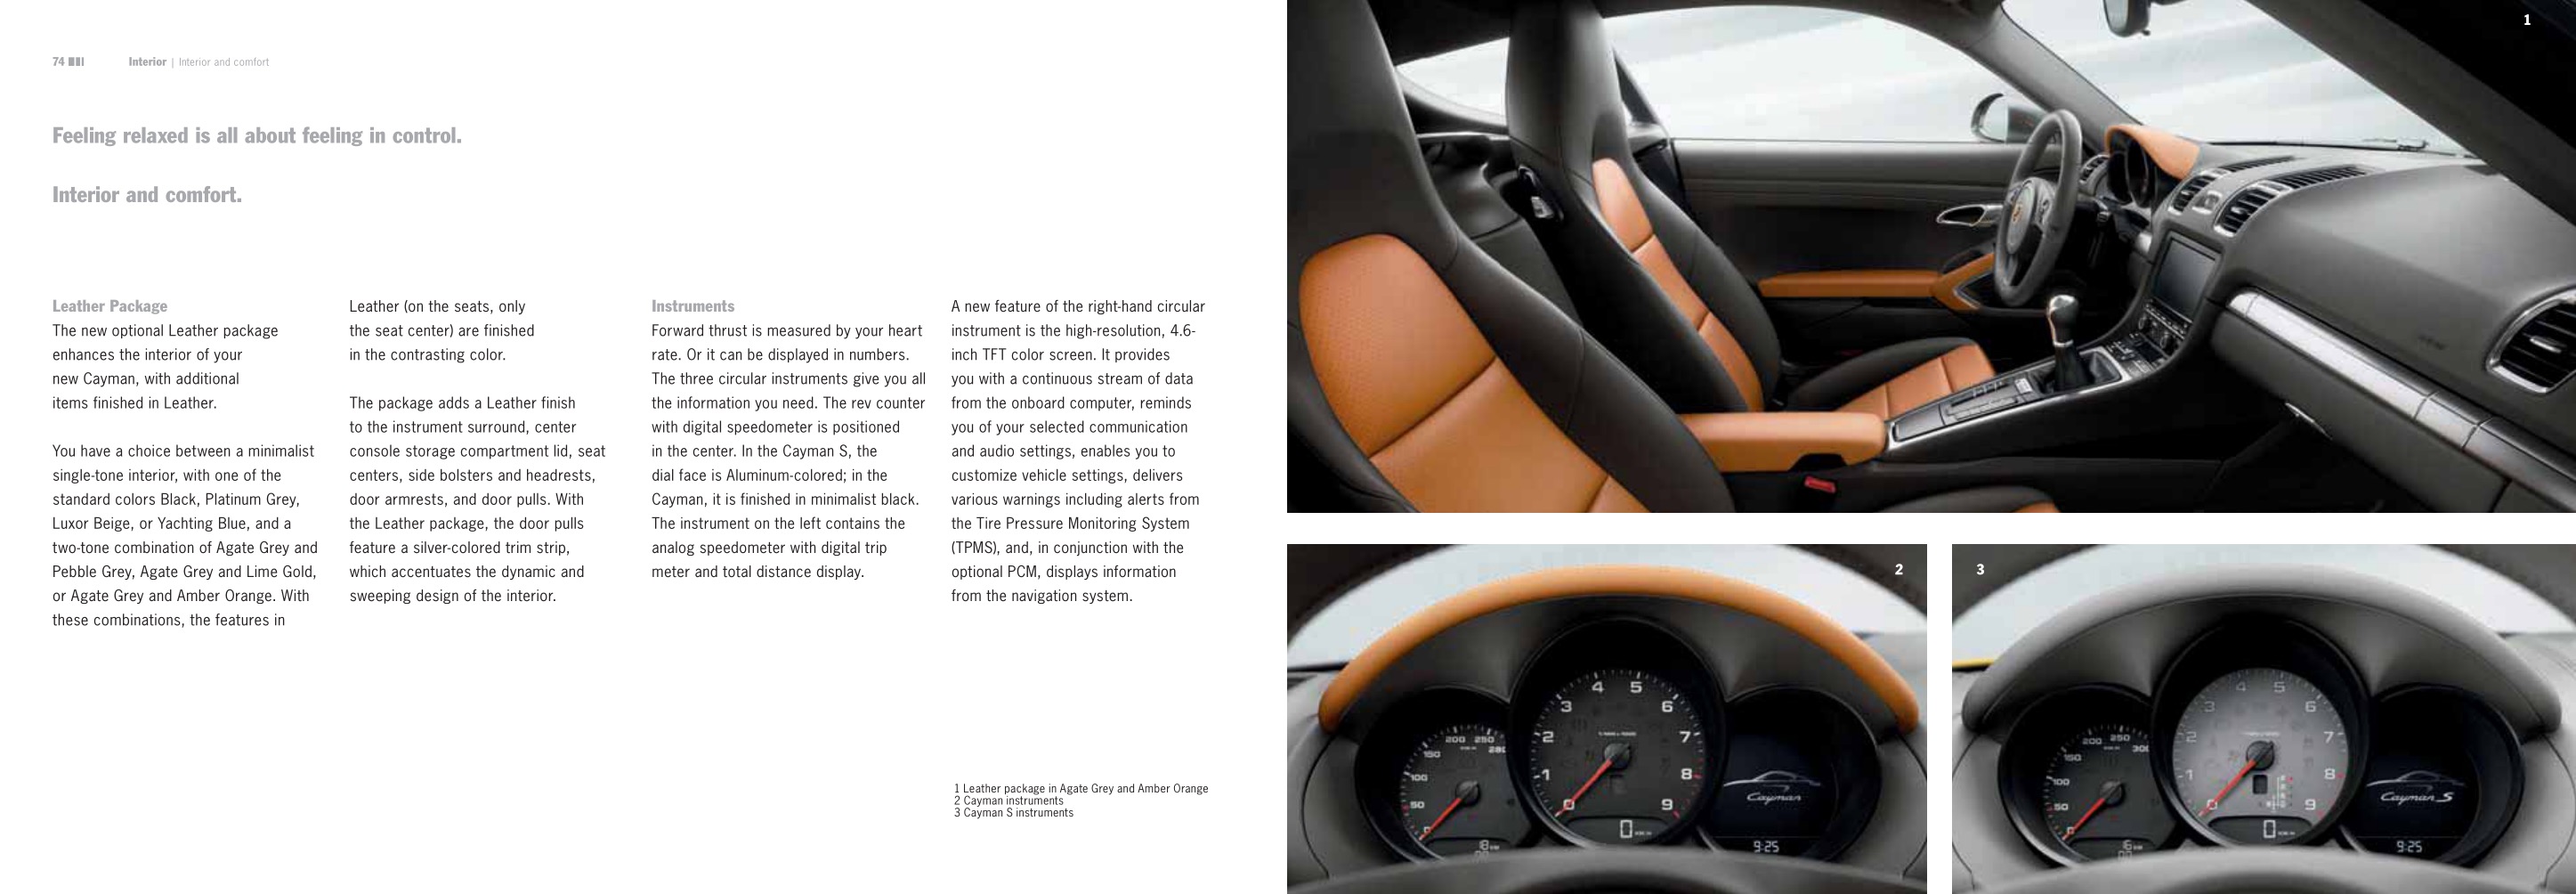 2014 Porsche Cayman Brochure Page 26